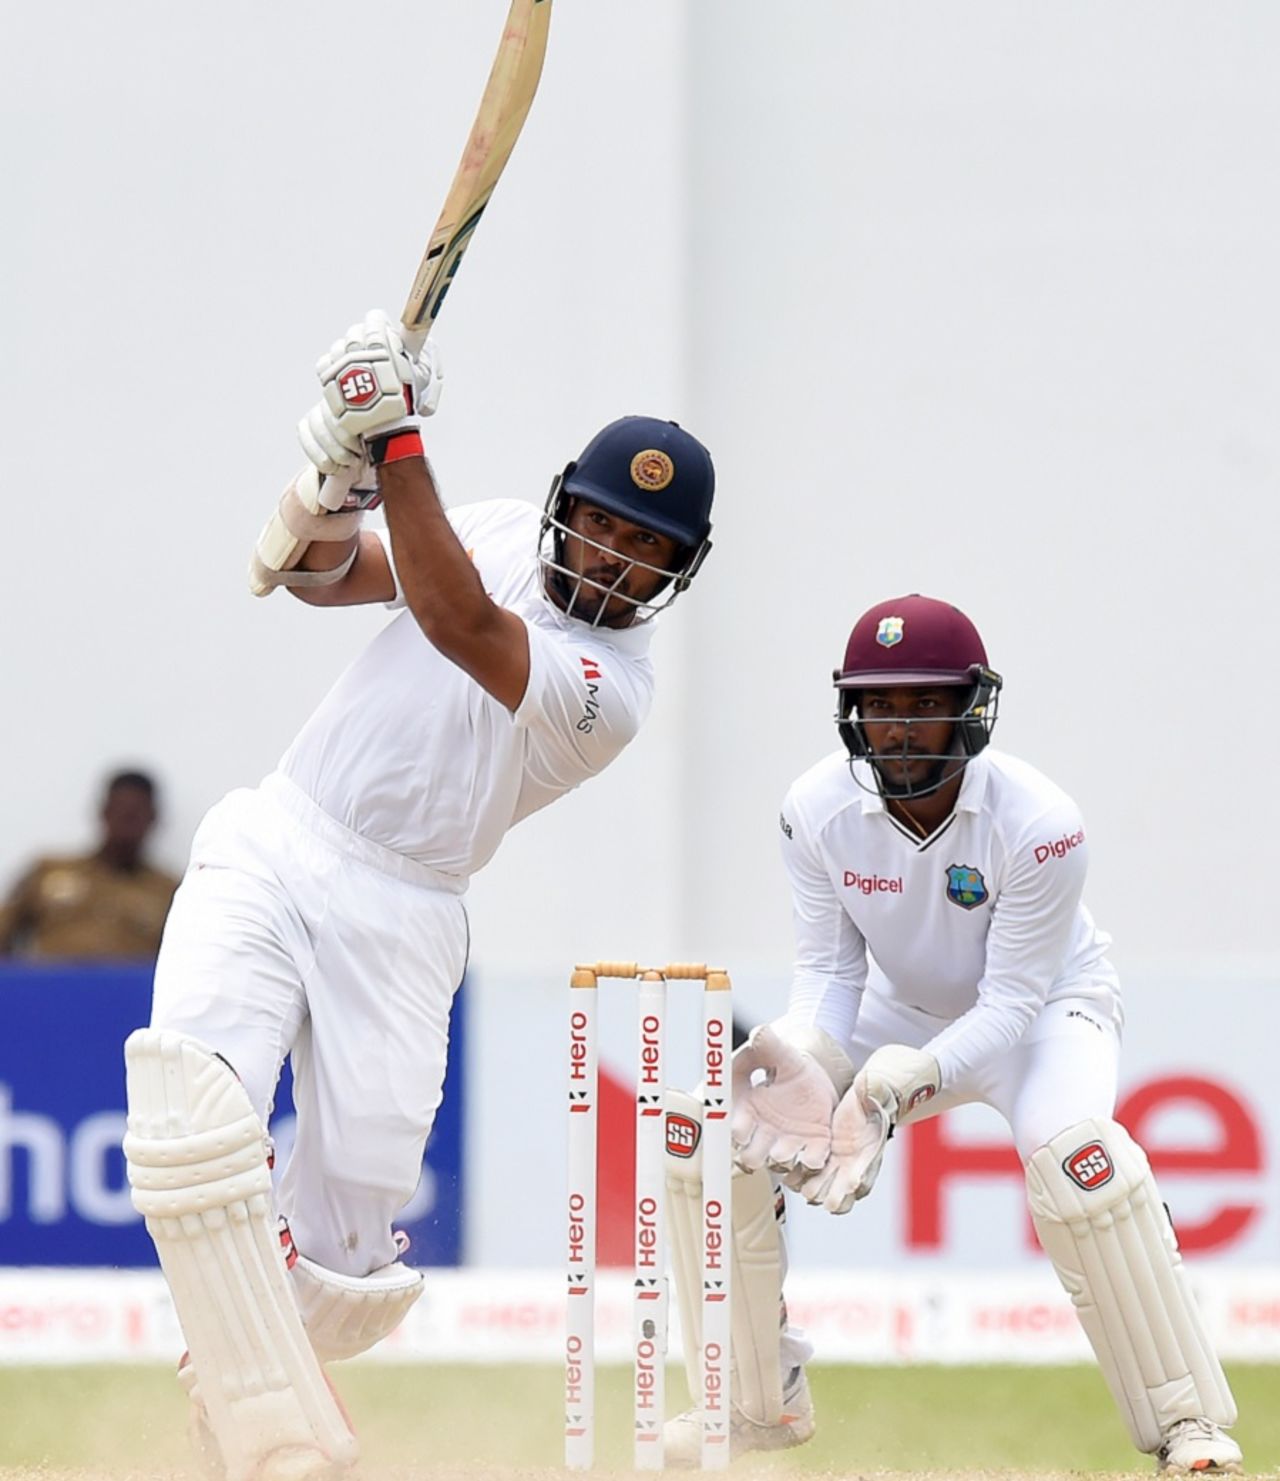 Milinda Siriwardana launches into a big shot, Sri Lanka v West Indies, 2nd Test, Colombo, 3rd day, October 24, 2015